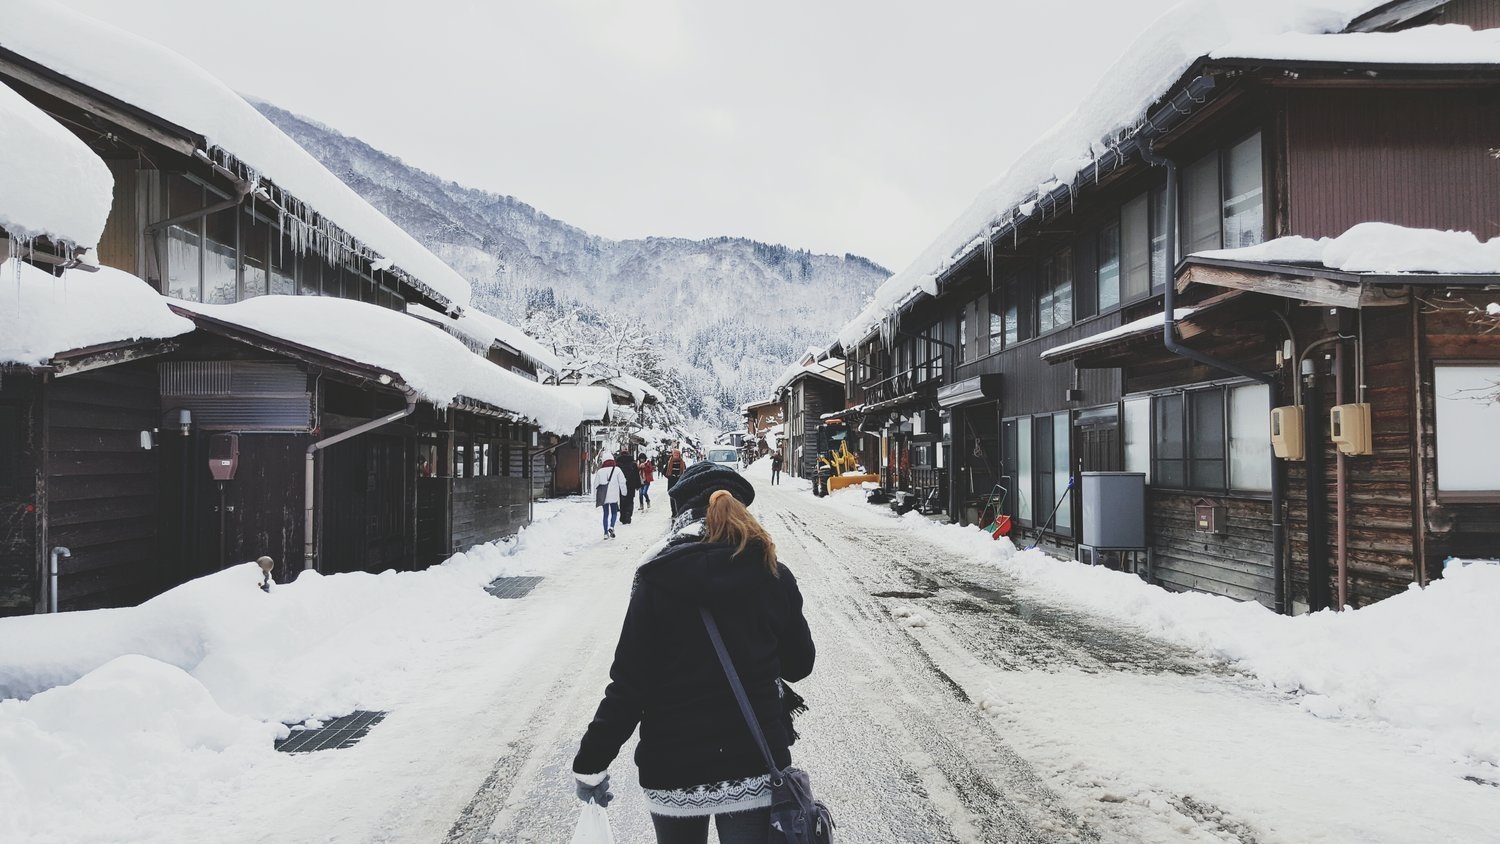 My Winter Experience in Japan's Gifu Prefecture